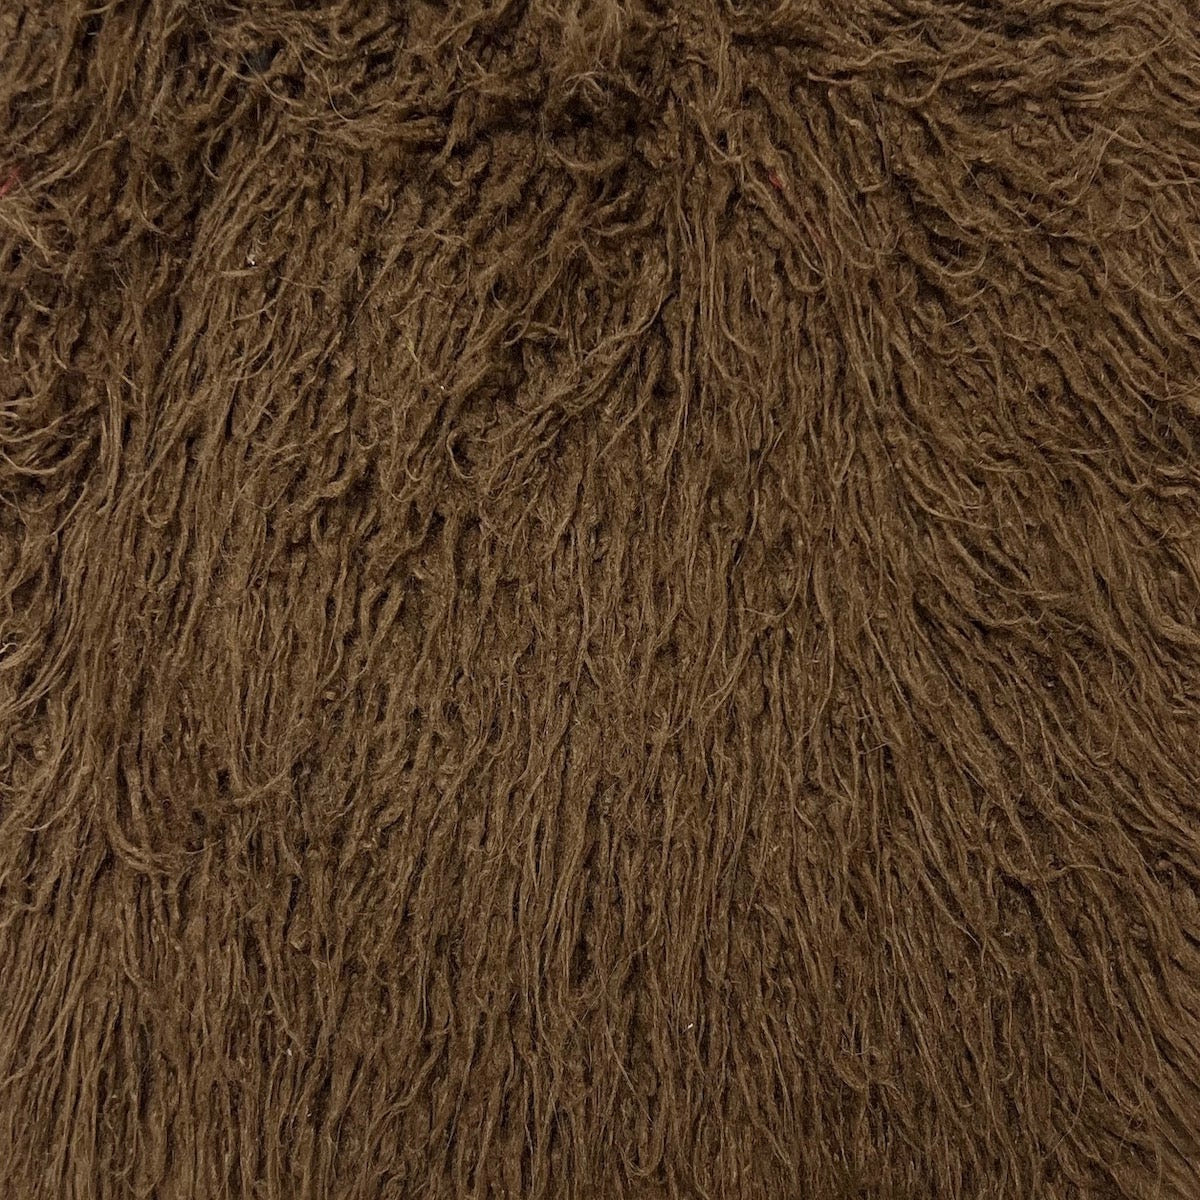 Tissu fausse fourrure bouclée à poils longs en alpaga marron chocolat 